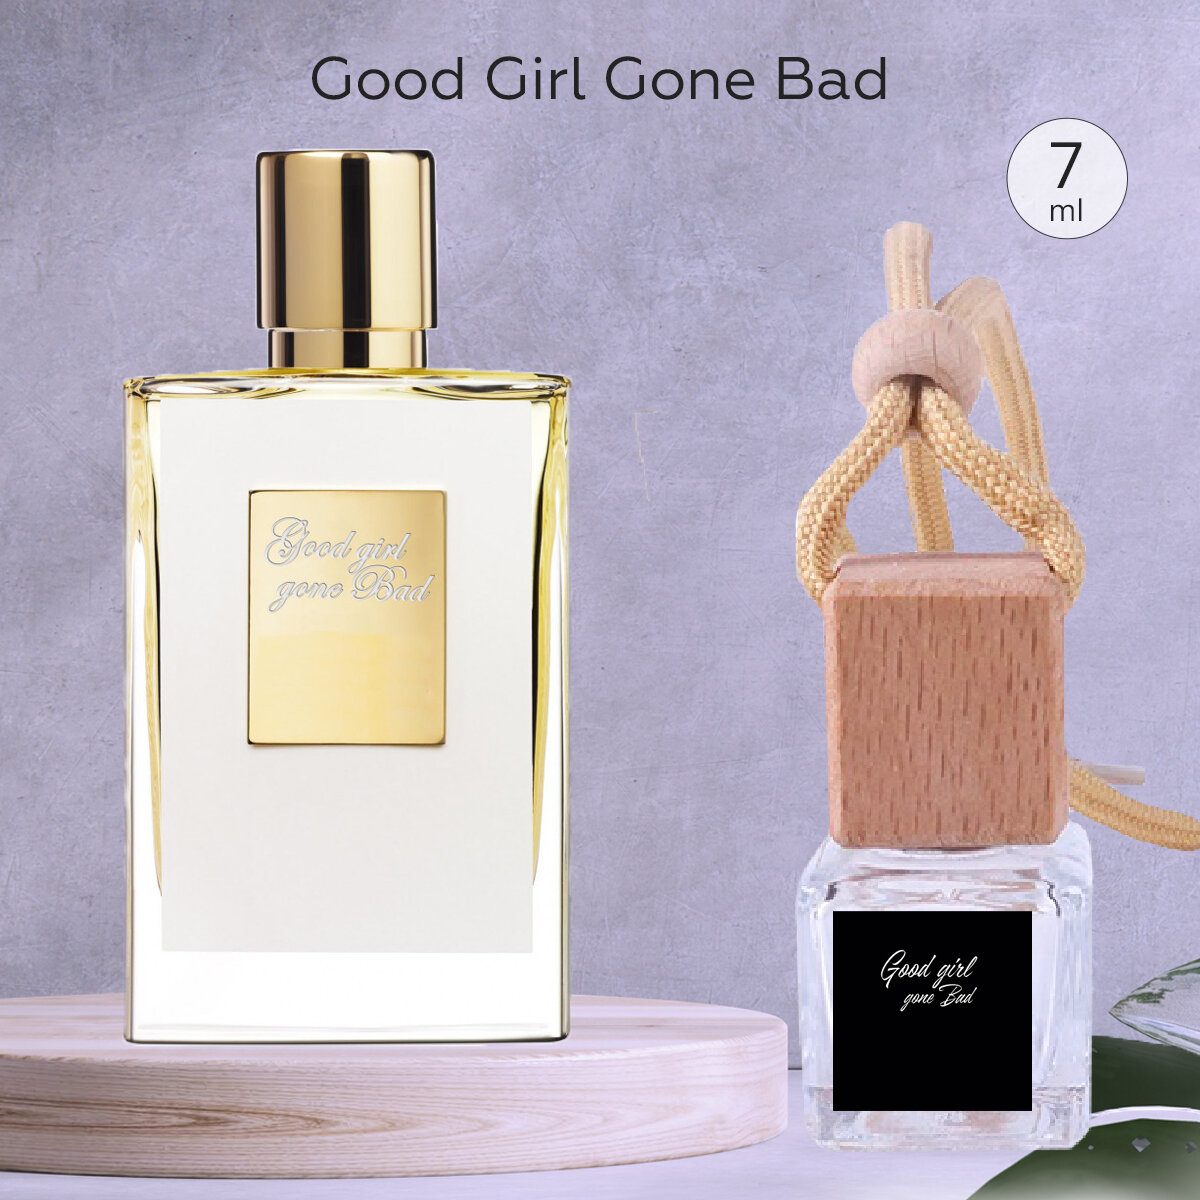 Gratus Parfum Good Girl Gone Bad Автопарфюм 7 мл / Ароматизатор для автомобиля и дома